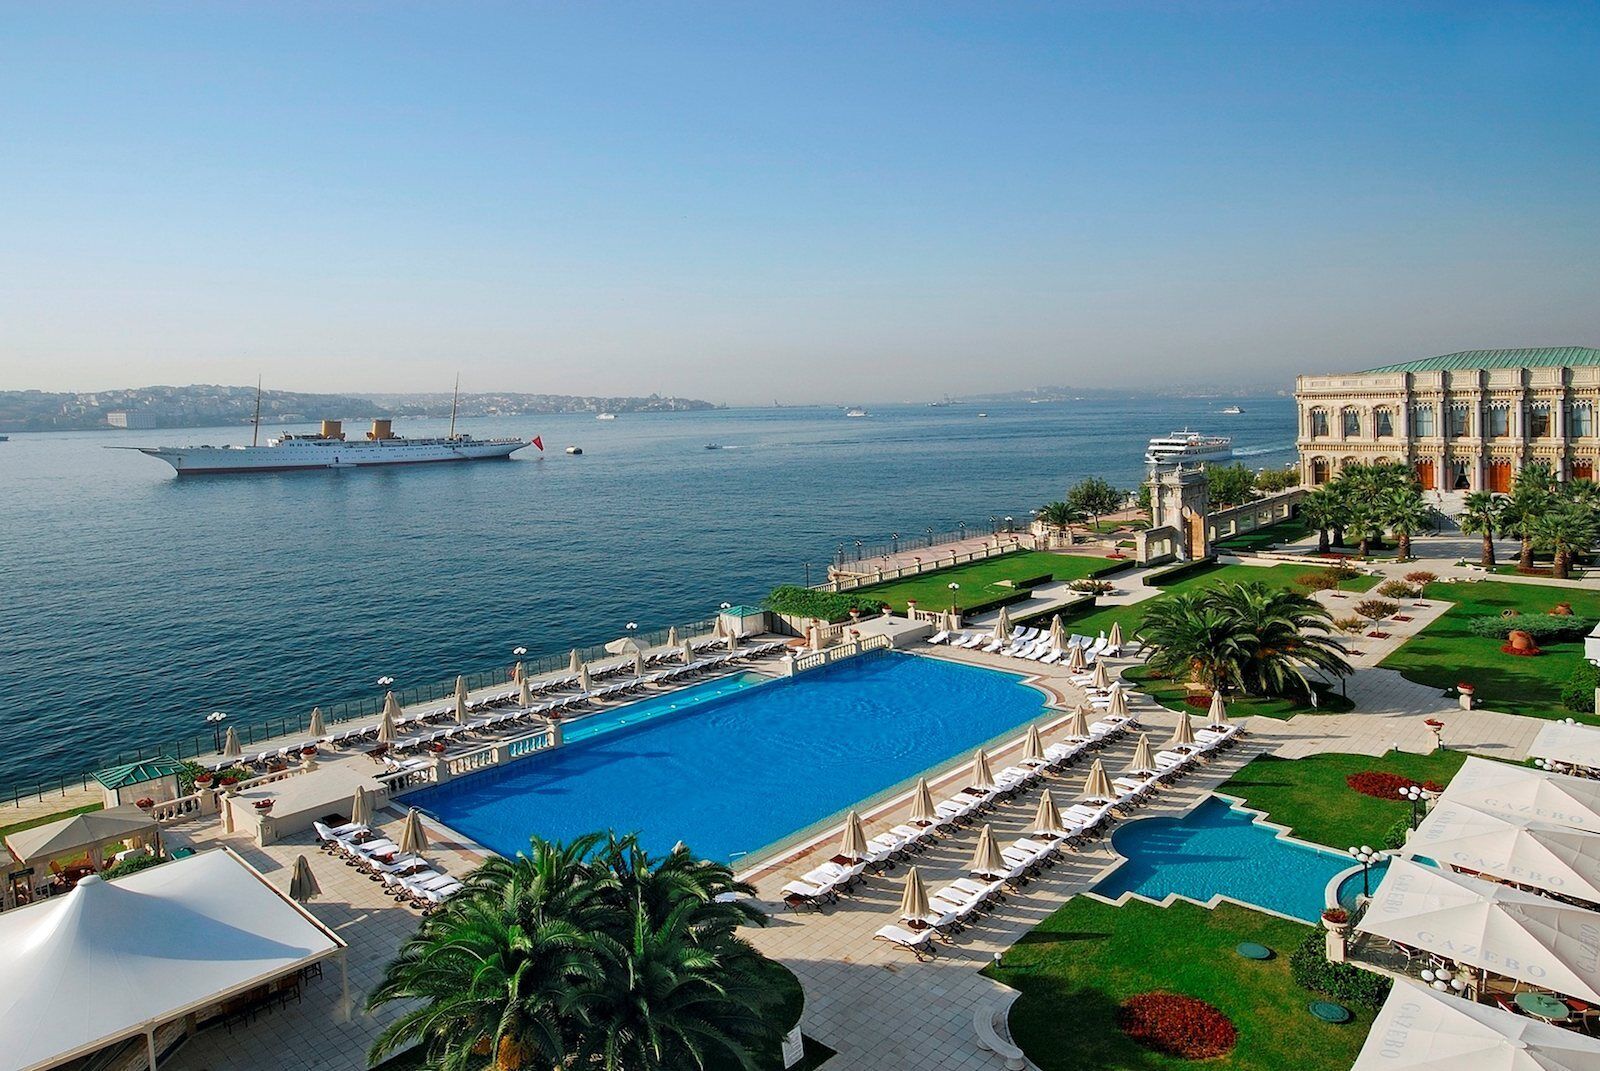 Palace hotel Istanbul_Ciragan Palace infinity pool and Bosphurs view